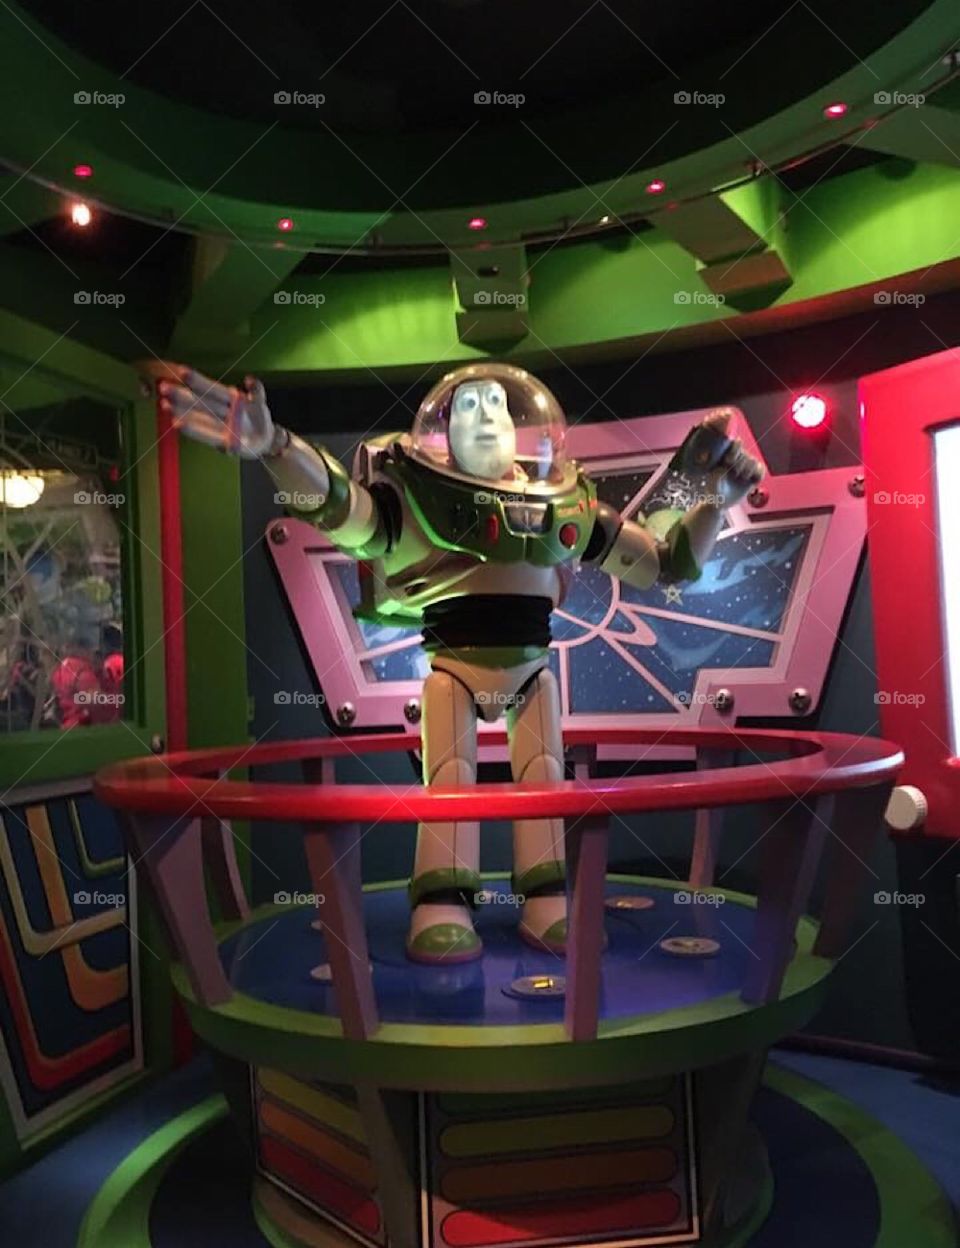 Buzz Lightyear in command at Disneyland, CA.